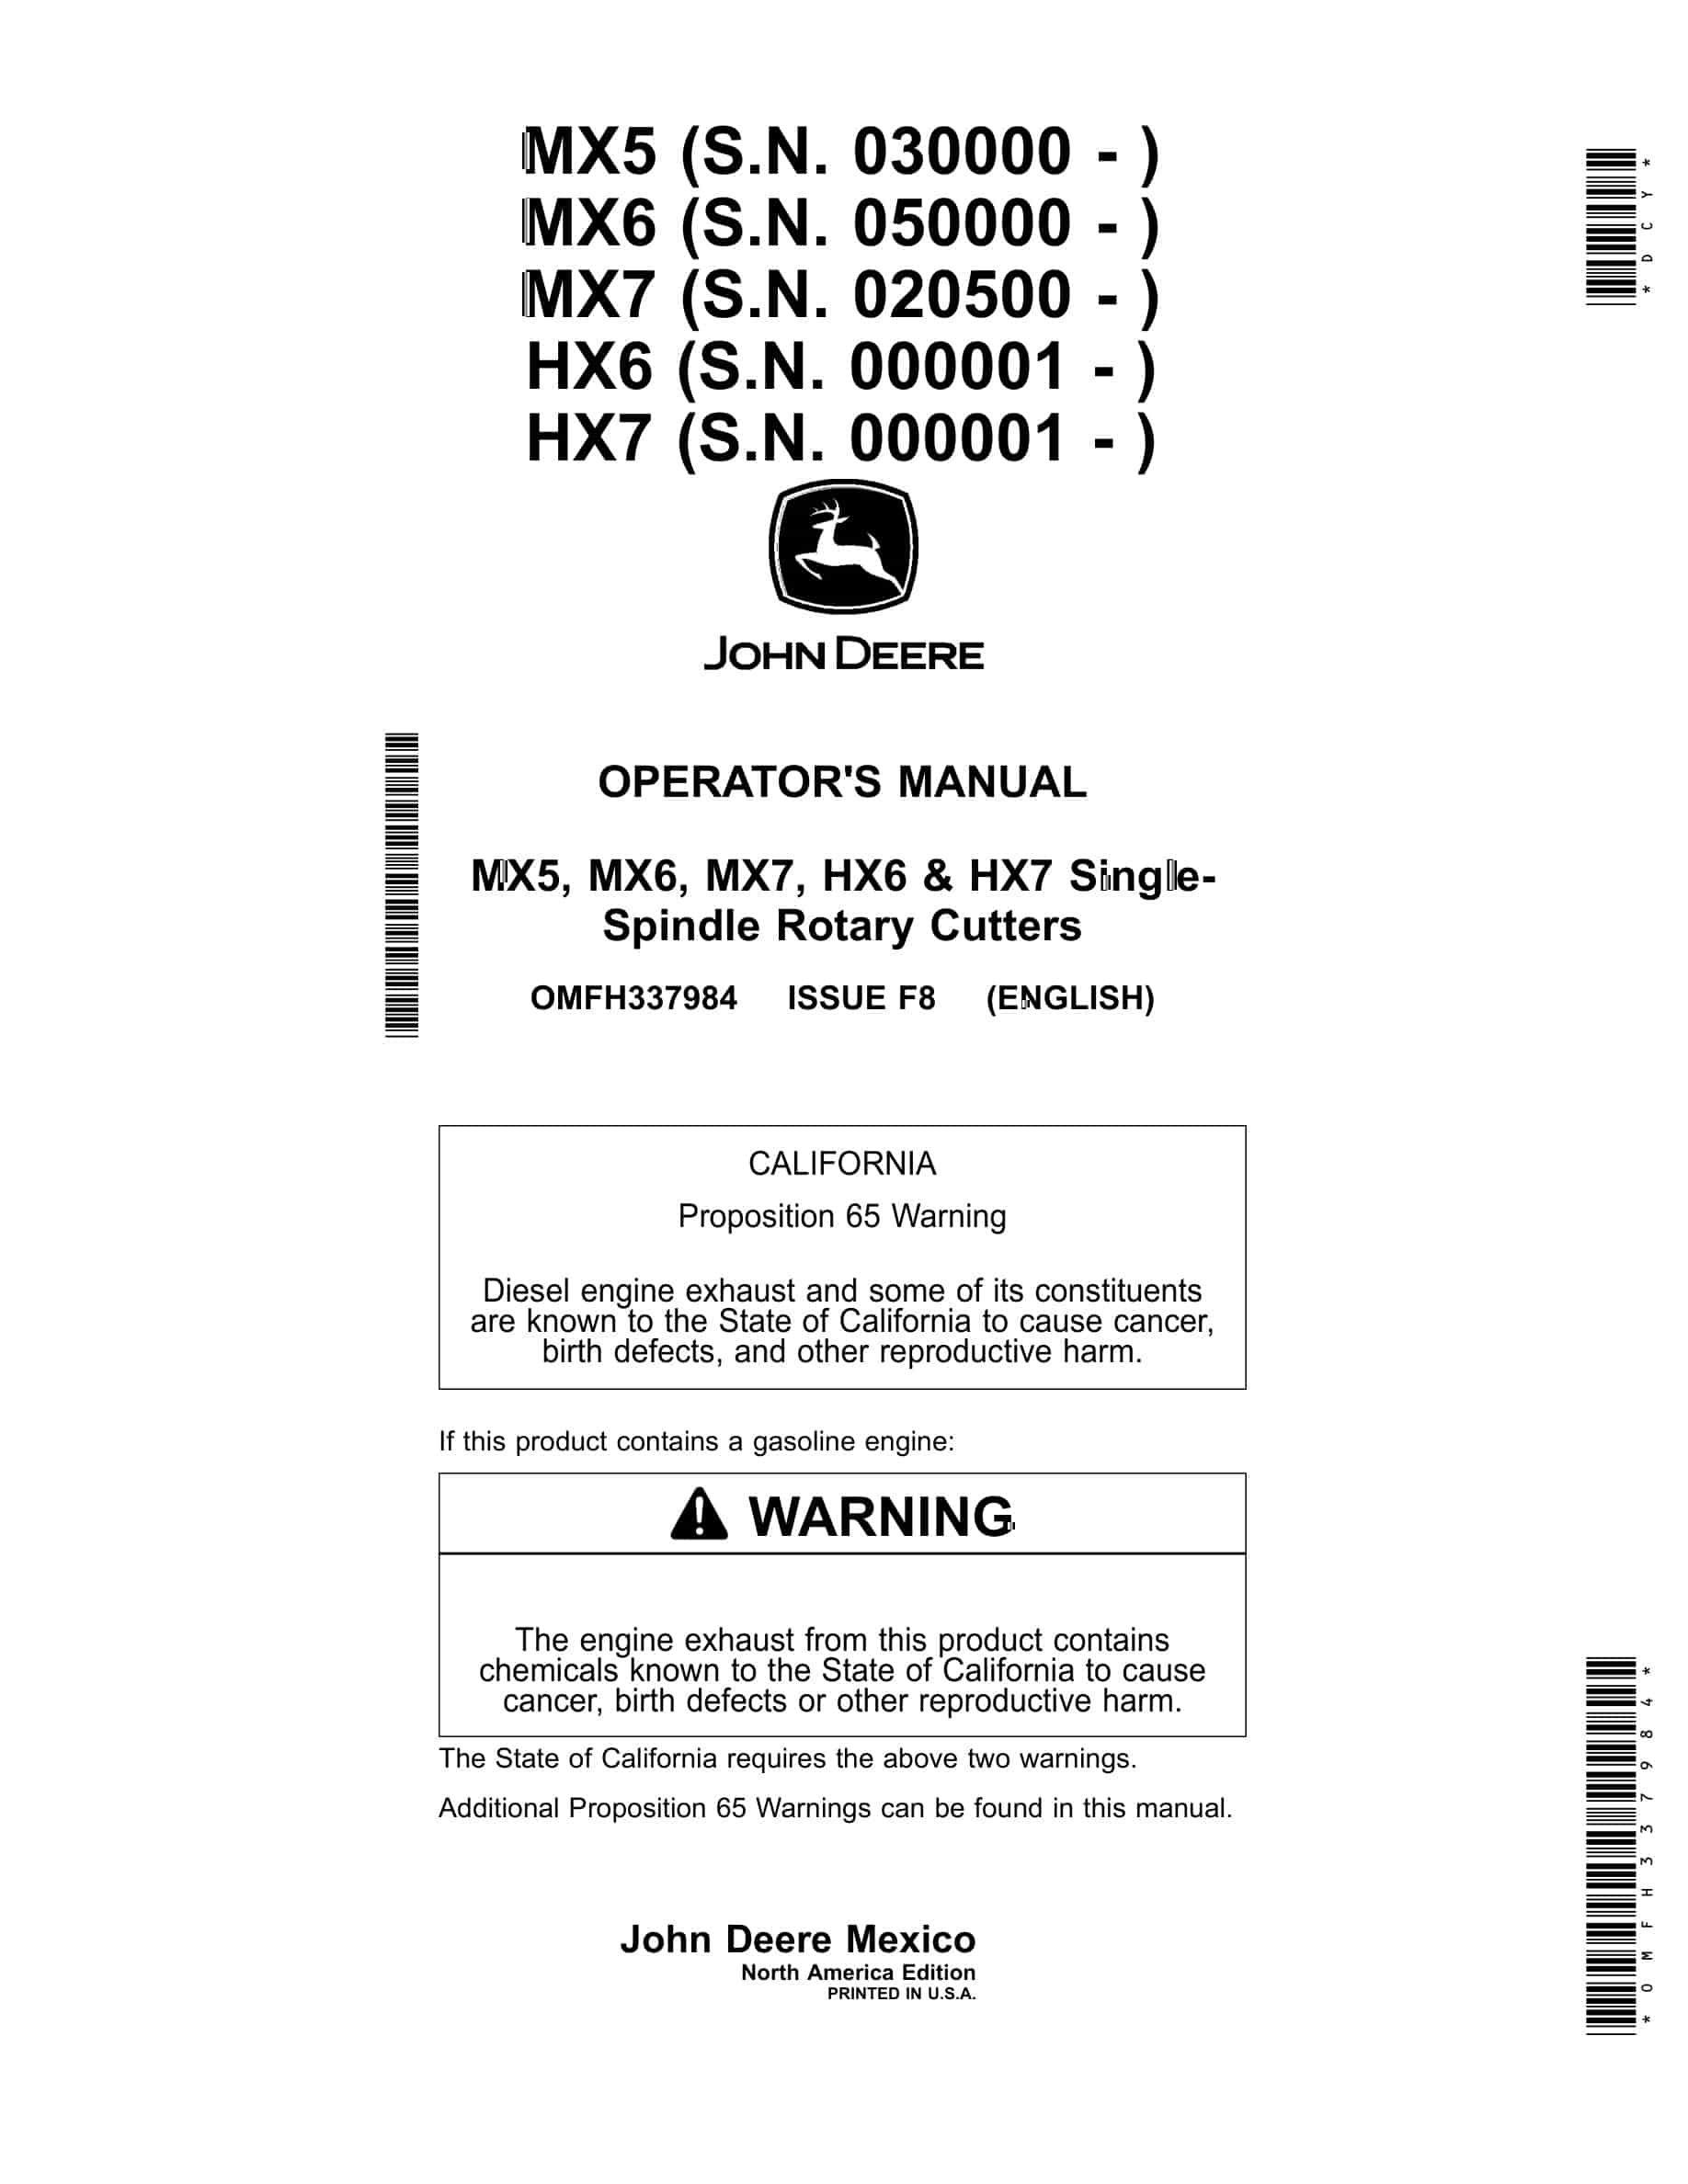 John Deere MX5, MX6, MX7, HX6 & HX7 Single Spindle Rotary Cutter Operator Manual OMFH337984-1